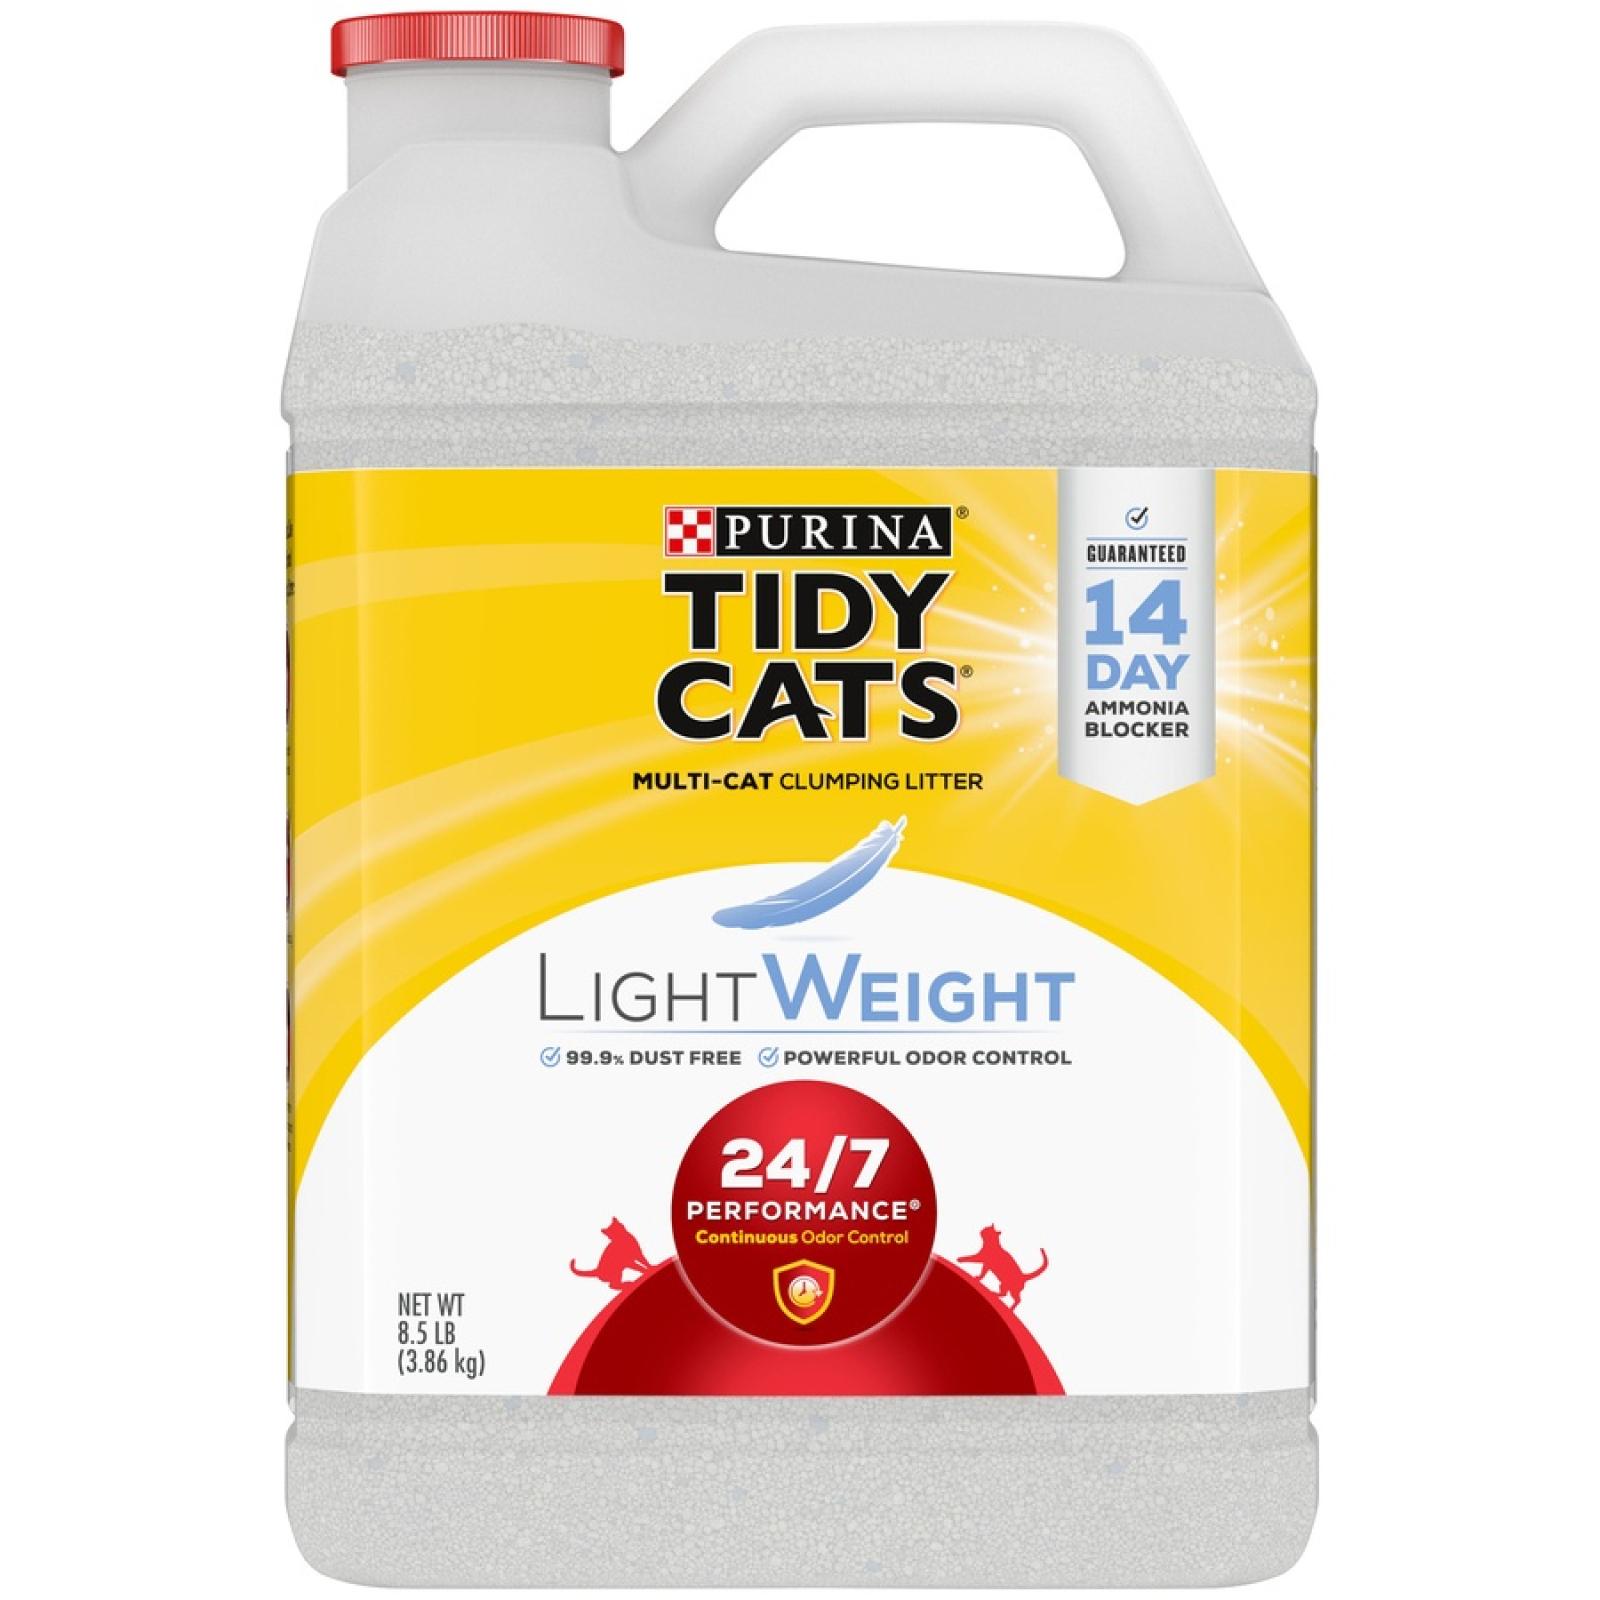 Purina Tidy Cats Lightweight 24/7 Performance Multi-Cat Clumping Litter